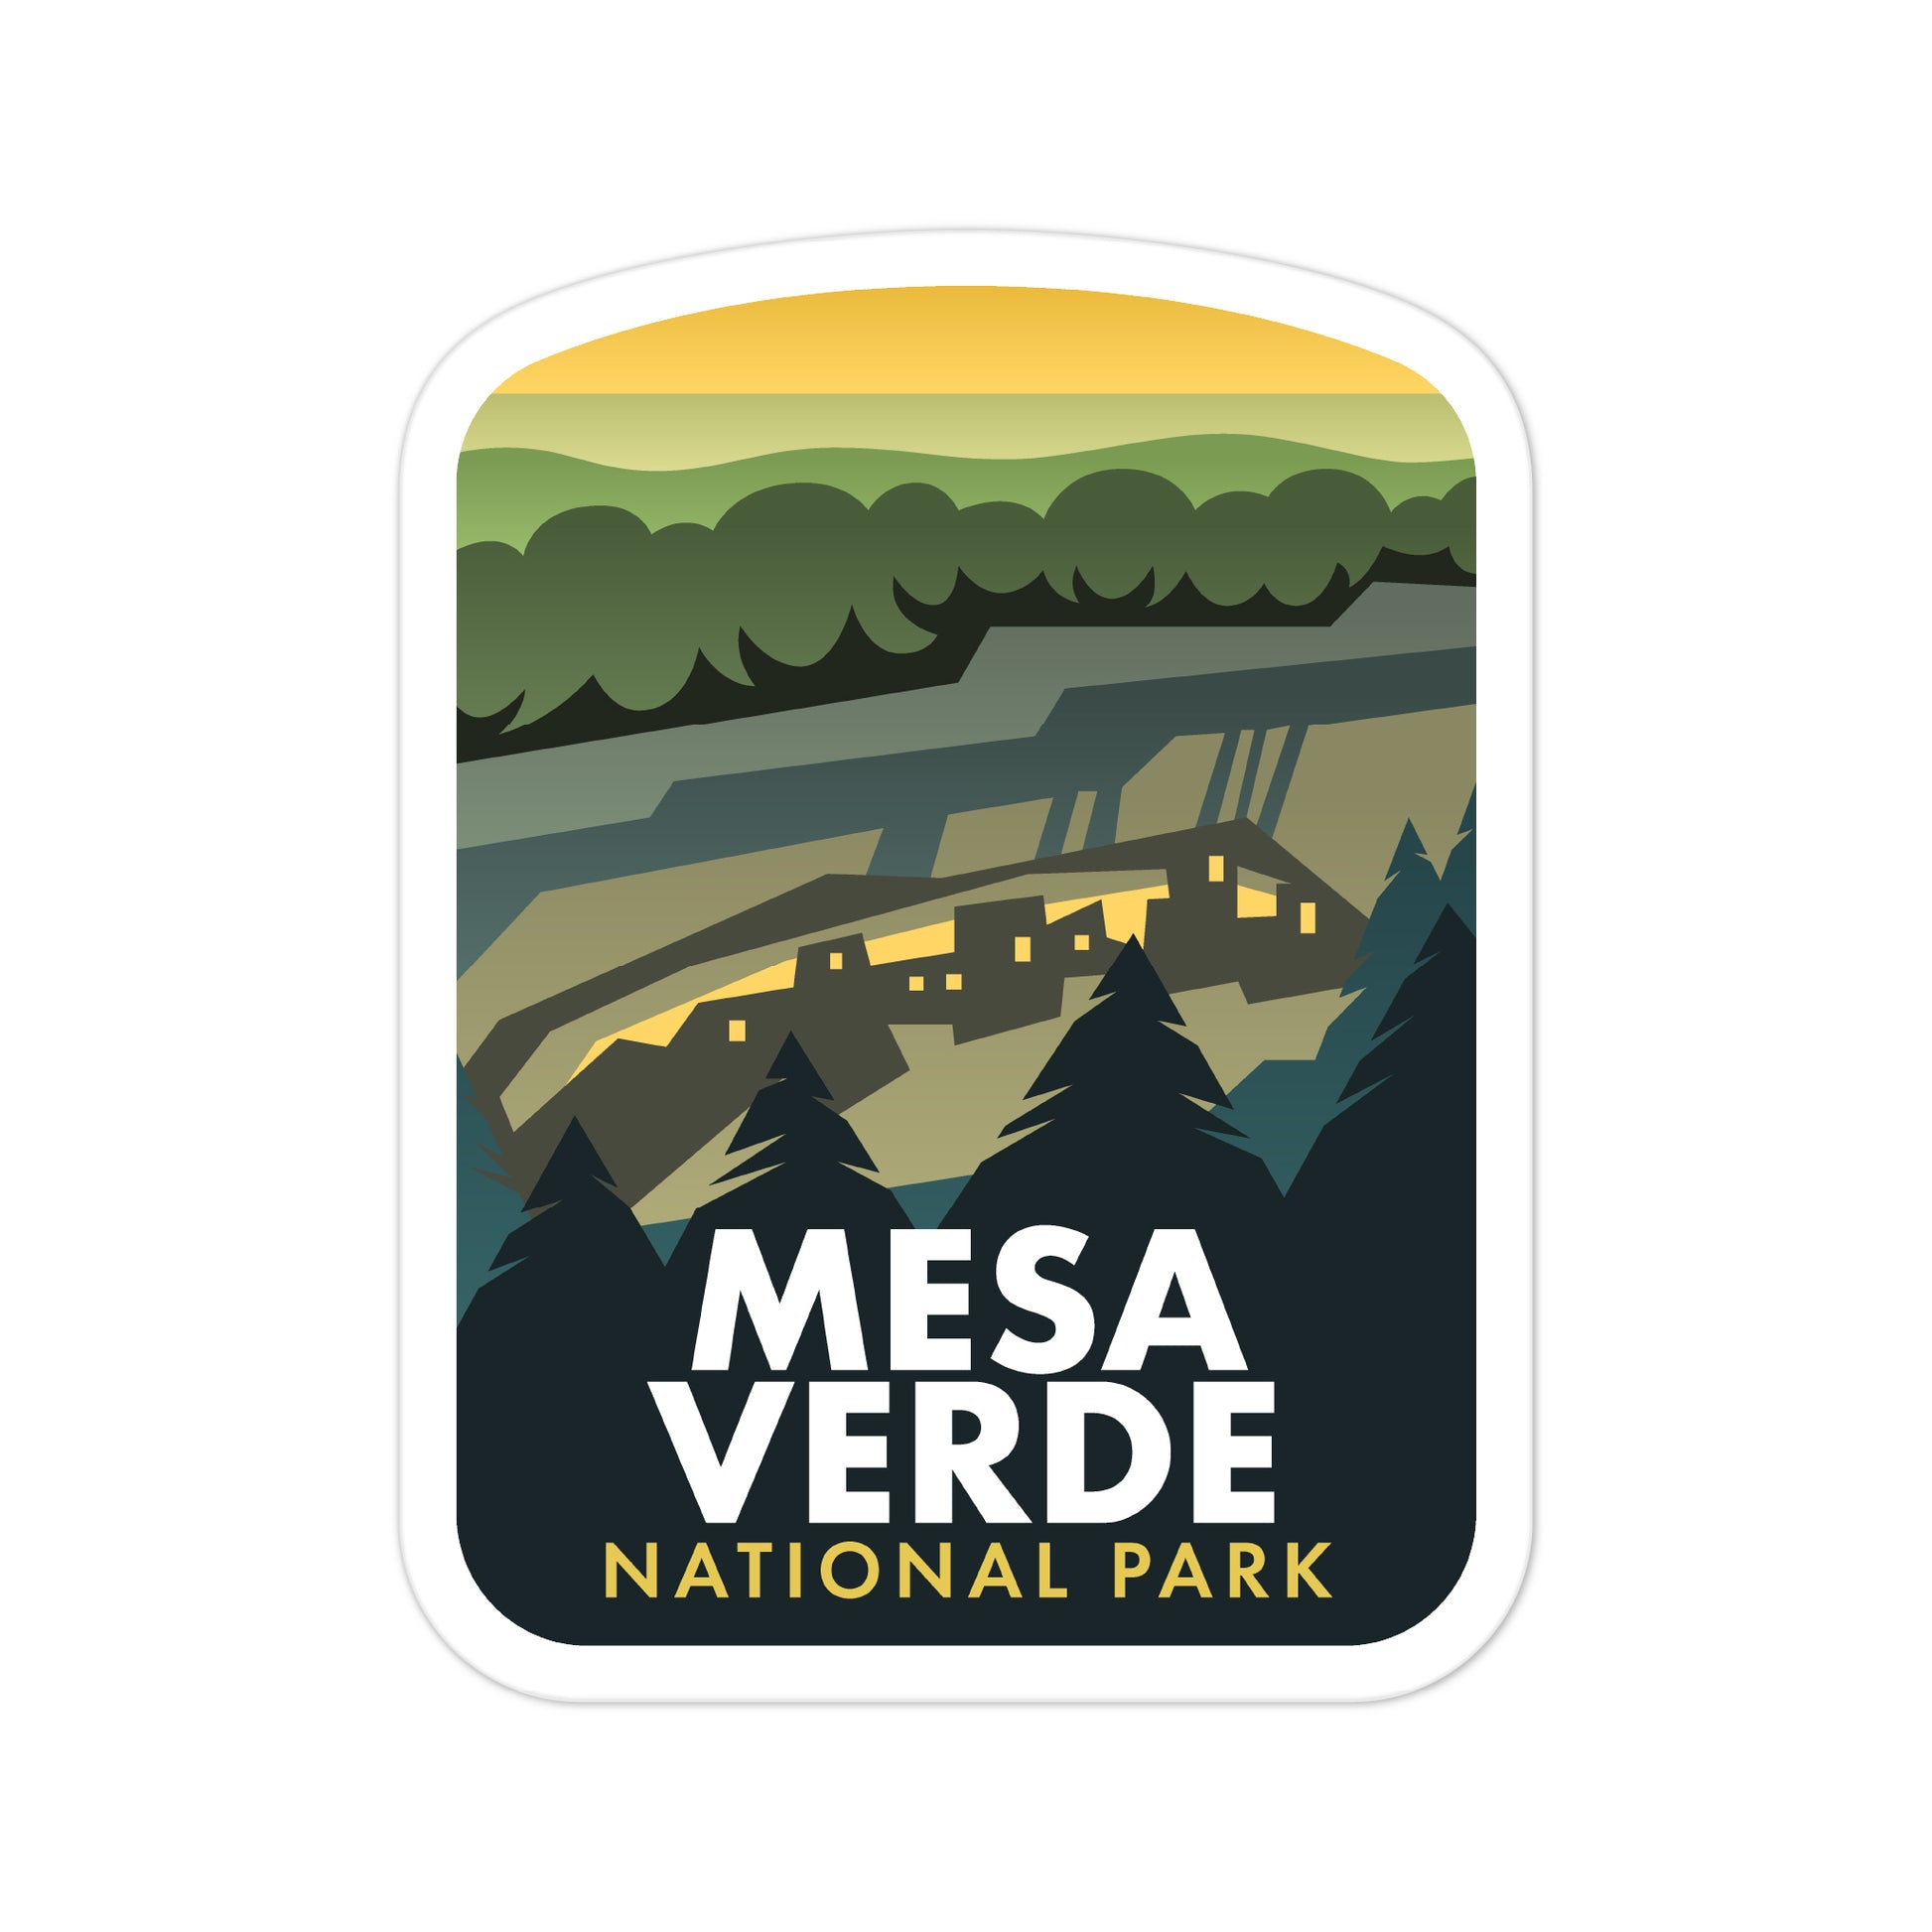 A sticker of Mesa Verde National Park